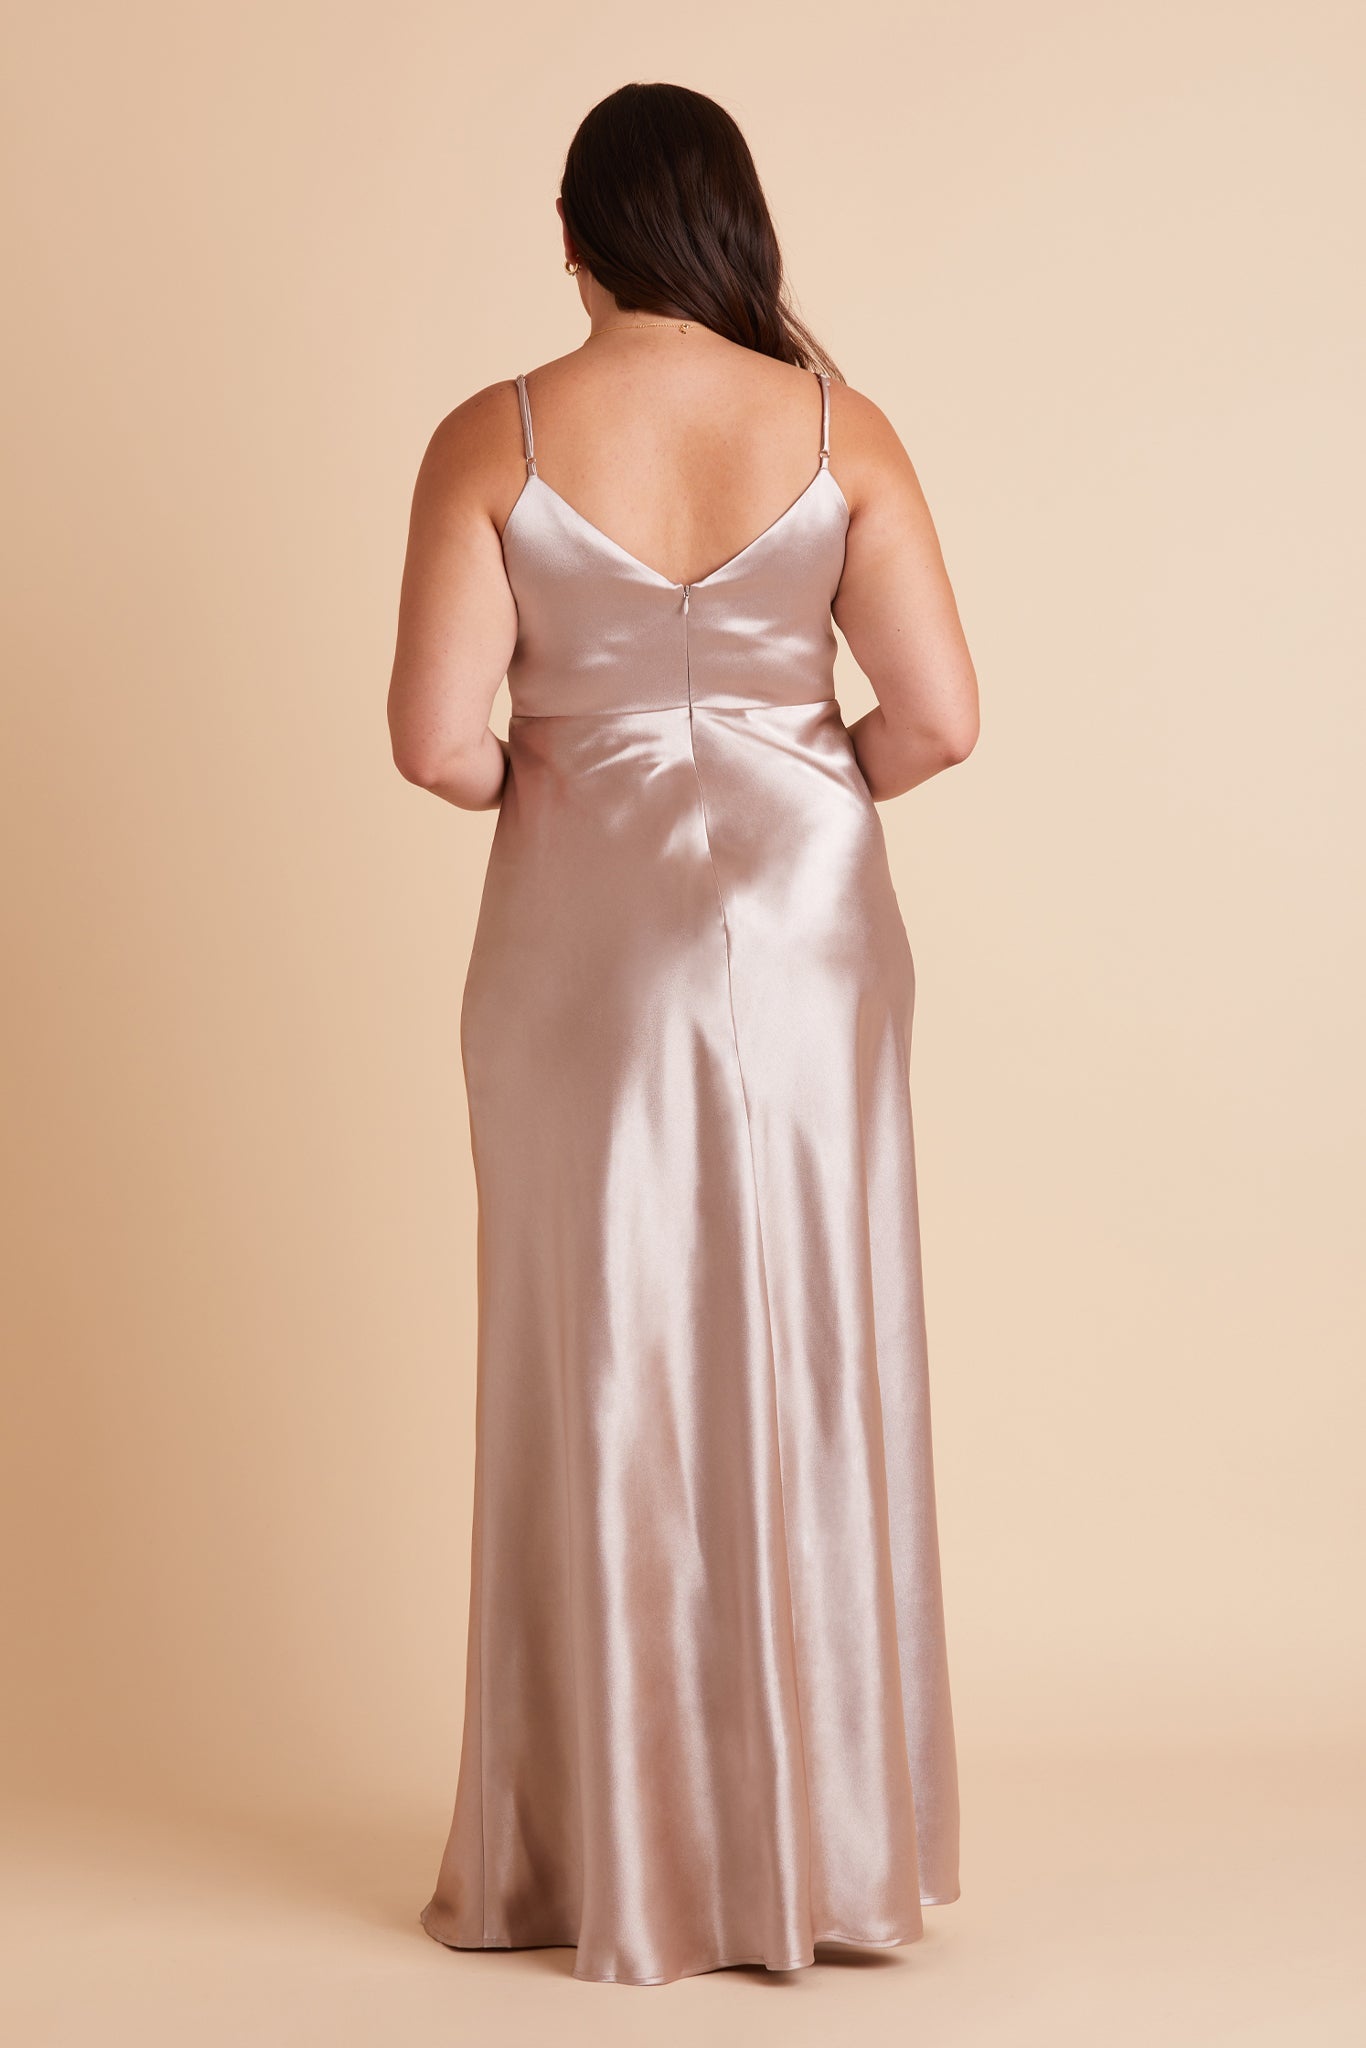 Birdy Gray bridesmaids dress review #birdygrey #lisa, Dresses